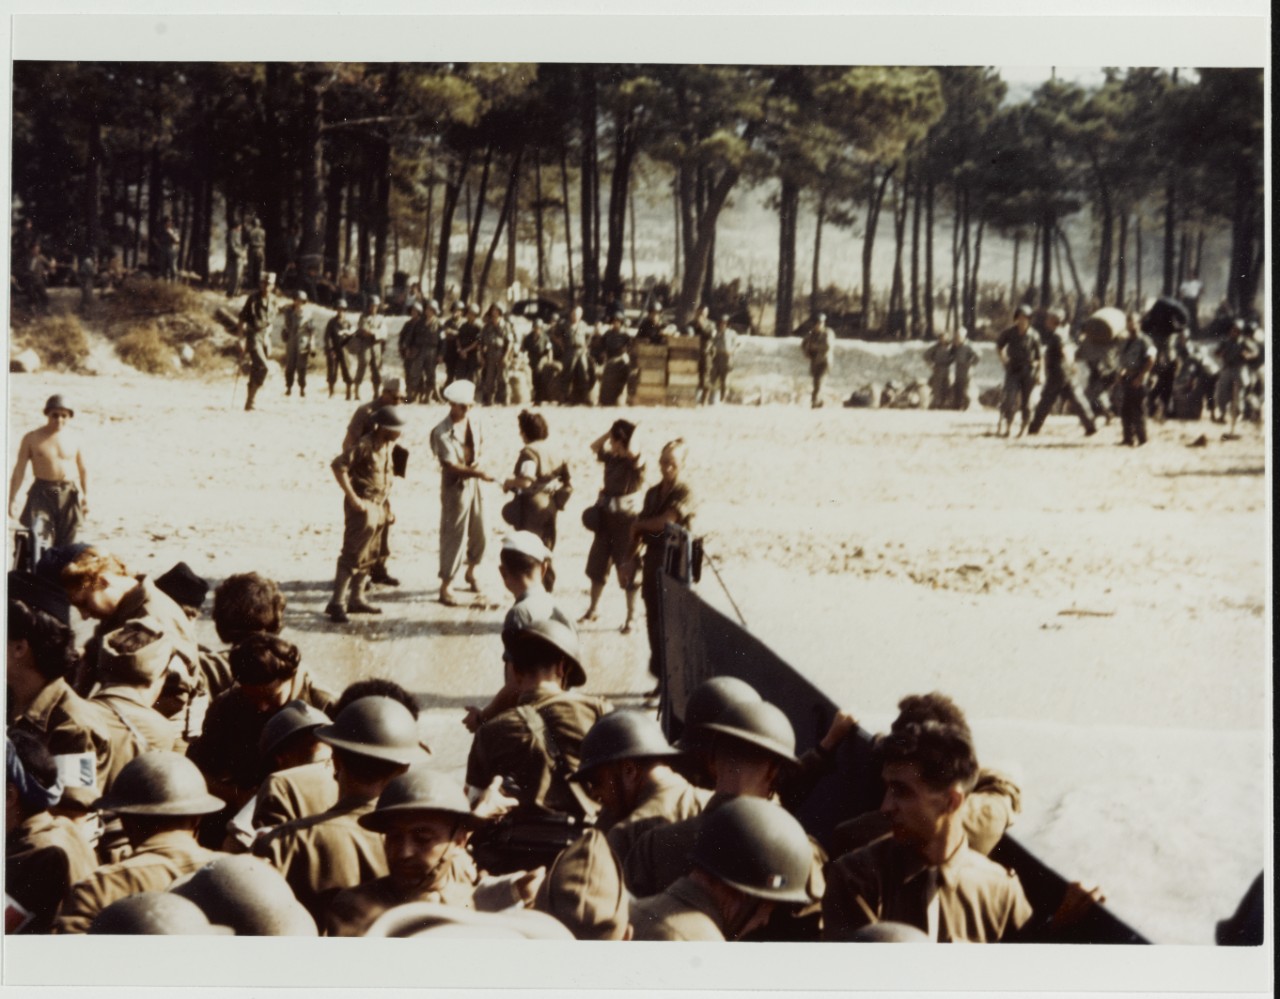 Southern France Invasion, August 1944. U.S. LCVP landing British personnel, including several women